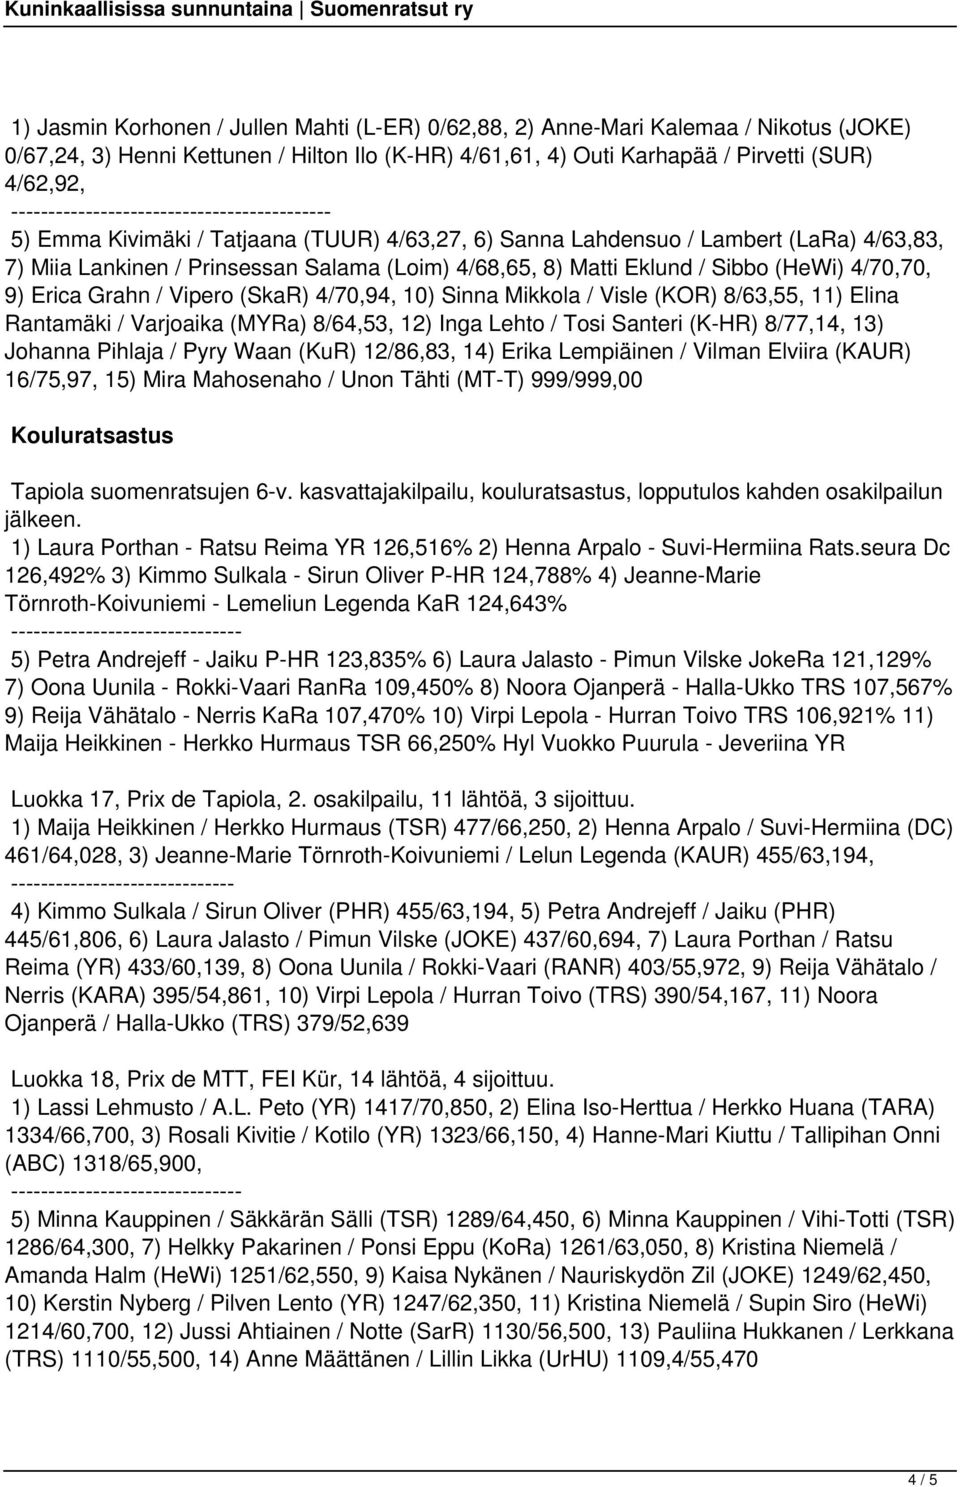 Eklund / Sibbo (HeWi) 4/70,70, 9) Erica Grahn / Vipero (SkaR) 4/70,94, 10) Sinna Mikkola / Visle (KOR) 8/63,55, 11) Elina Rantamäki / Varjoaika (MYRa) 8/64,53, 12) Inga Lehto / Tosi Santeri (K-HR)